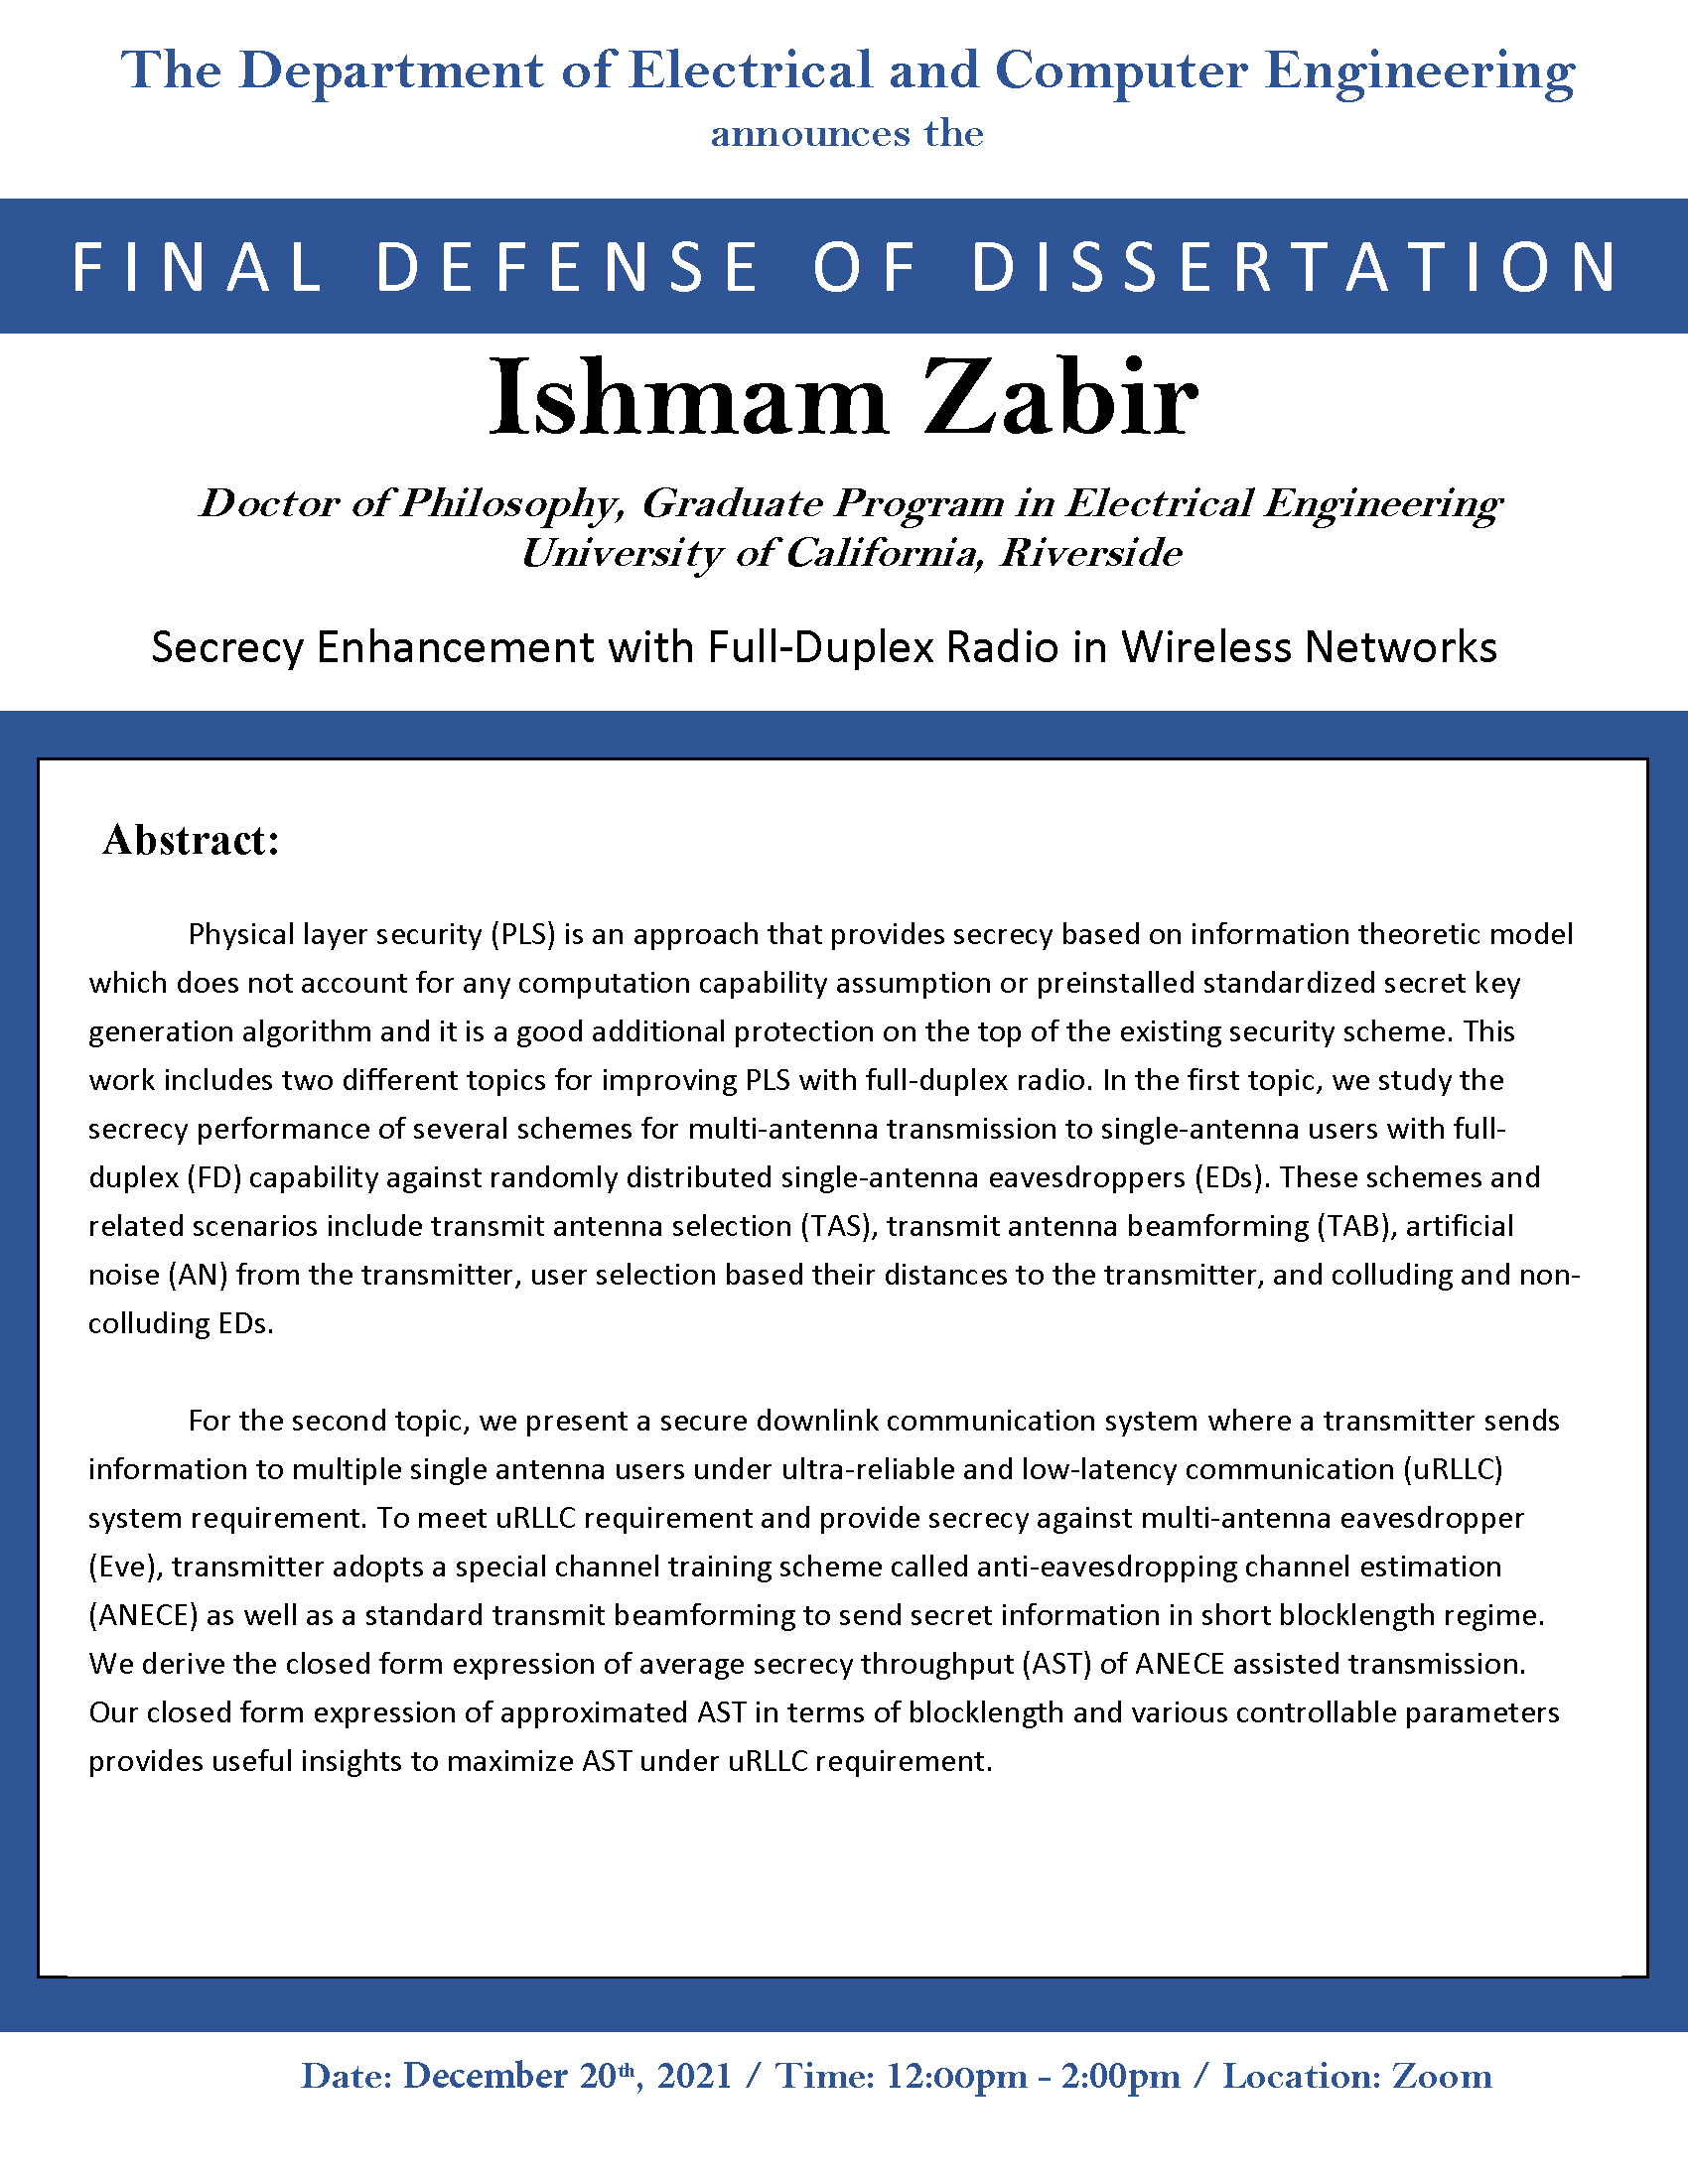 ZABIR, Ishmam Phd Dissertation Flyer